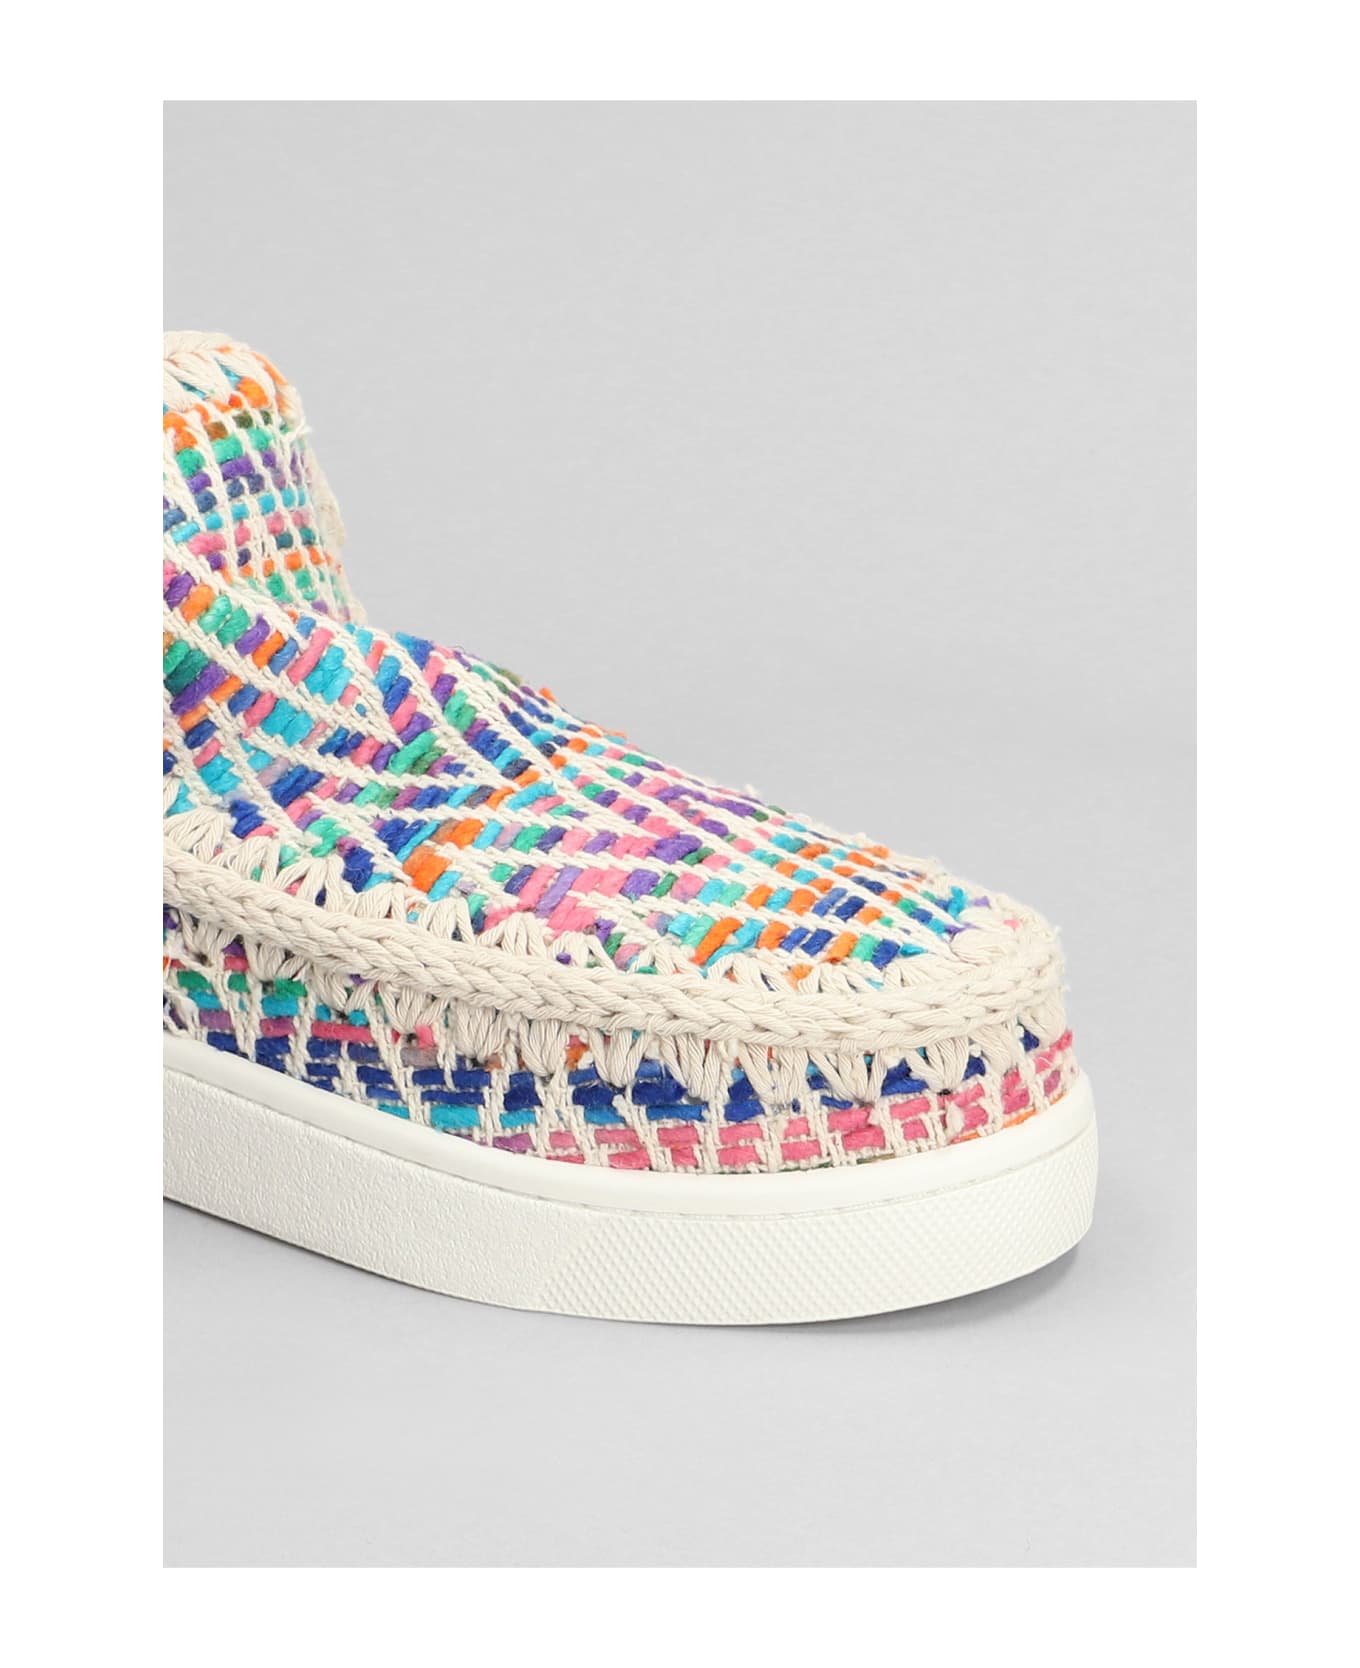 Mou Eskimo Sneaker Low Heels Ankle Boots In Multicolor Synthetic Fibers - multicolor